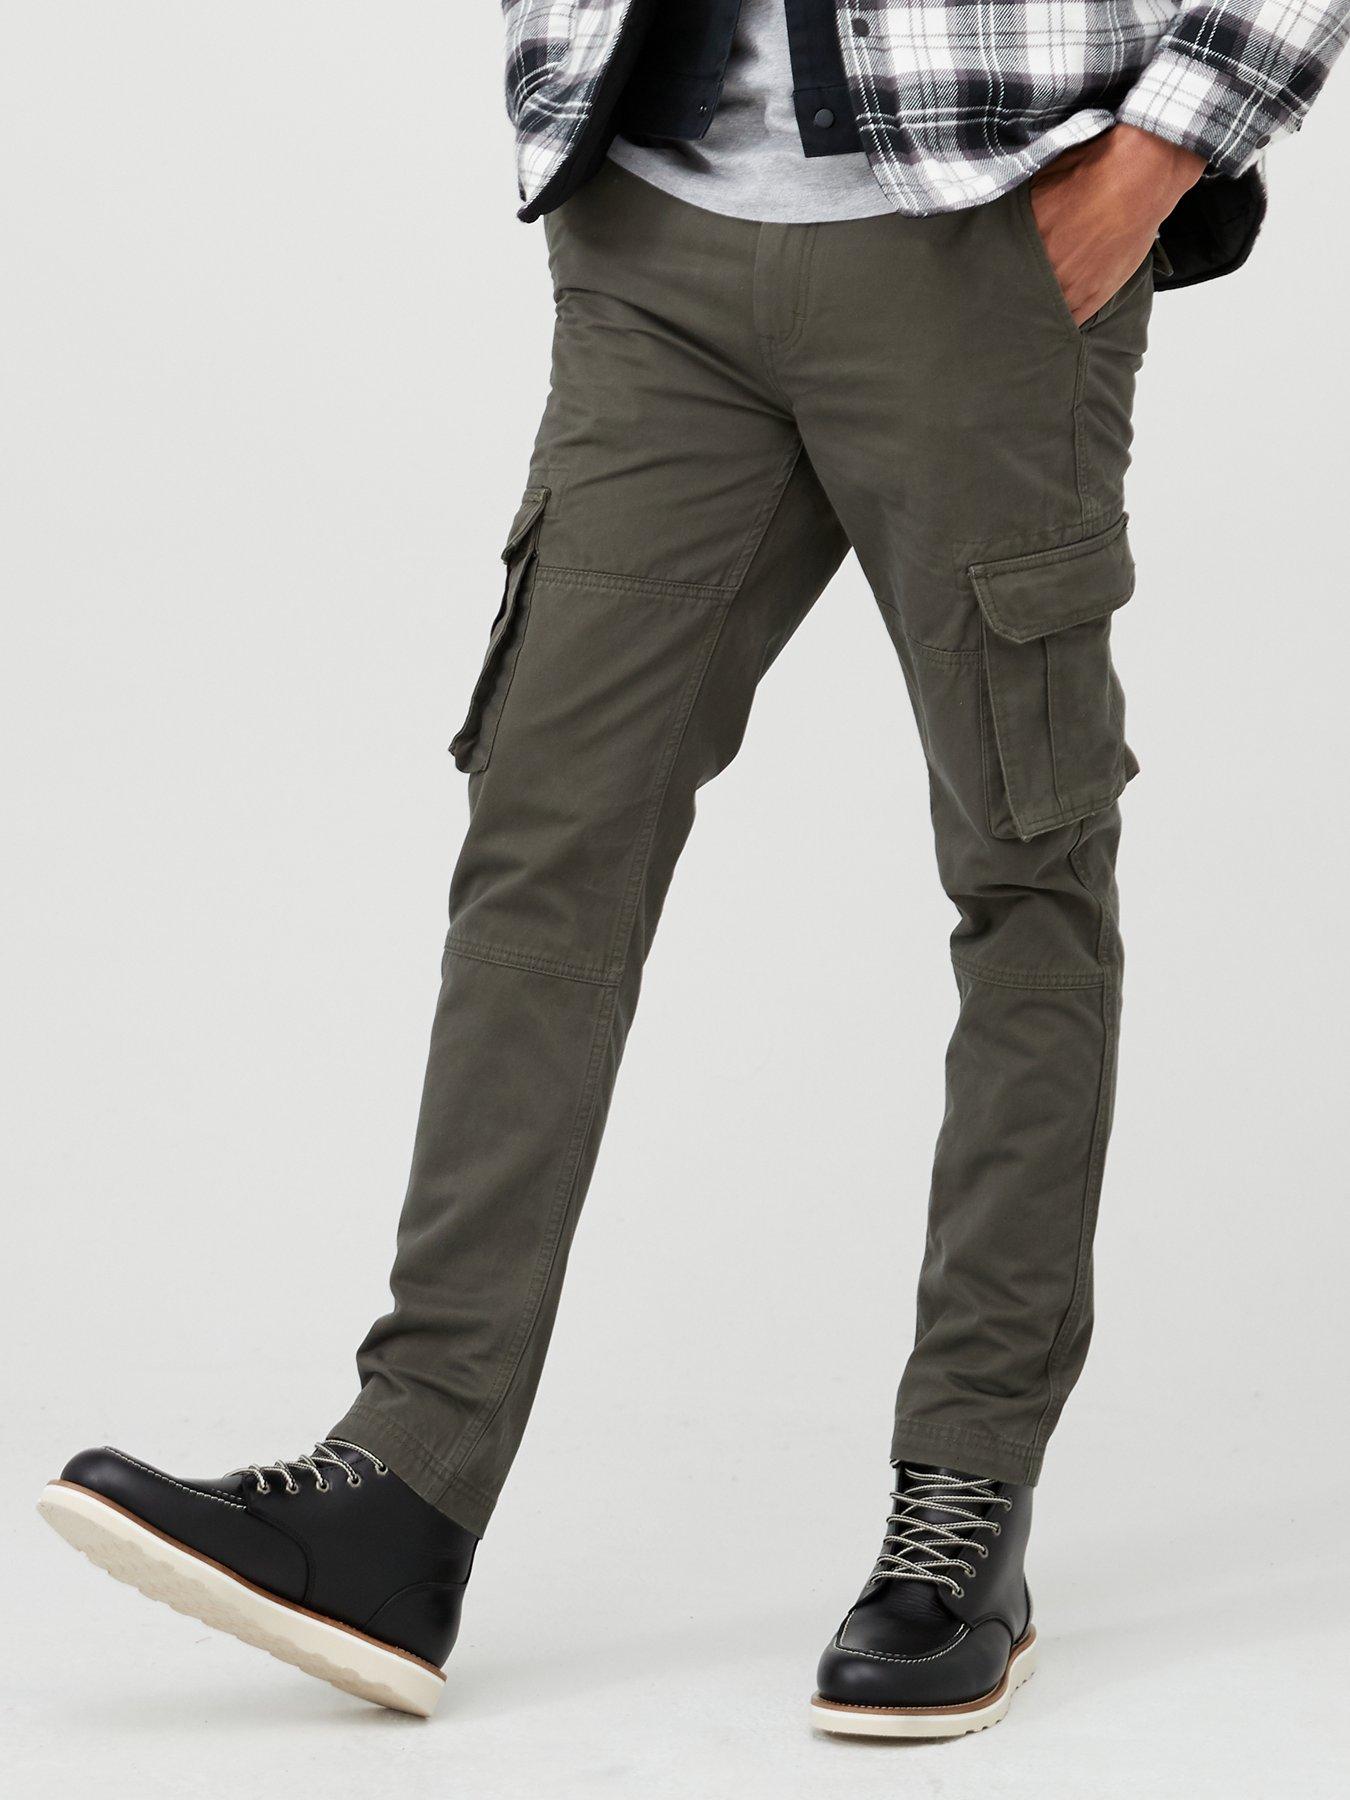 Cargo Trousers Khaki - khakis with black shoes original roblox